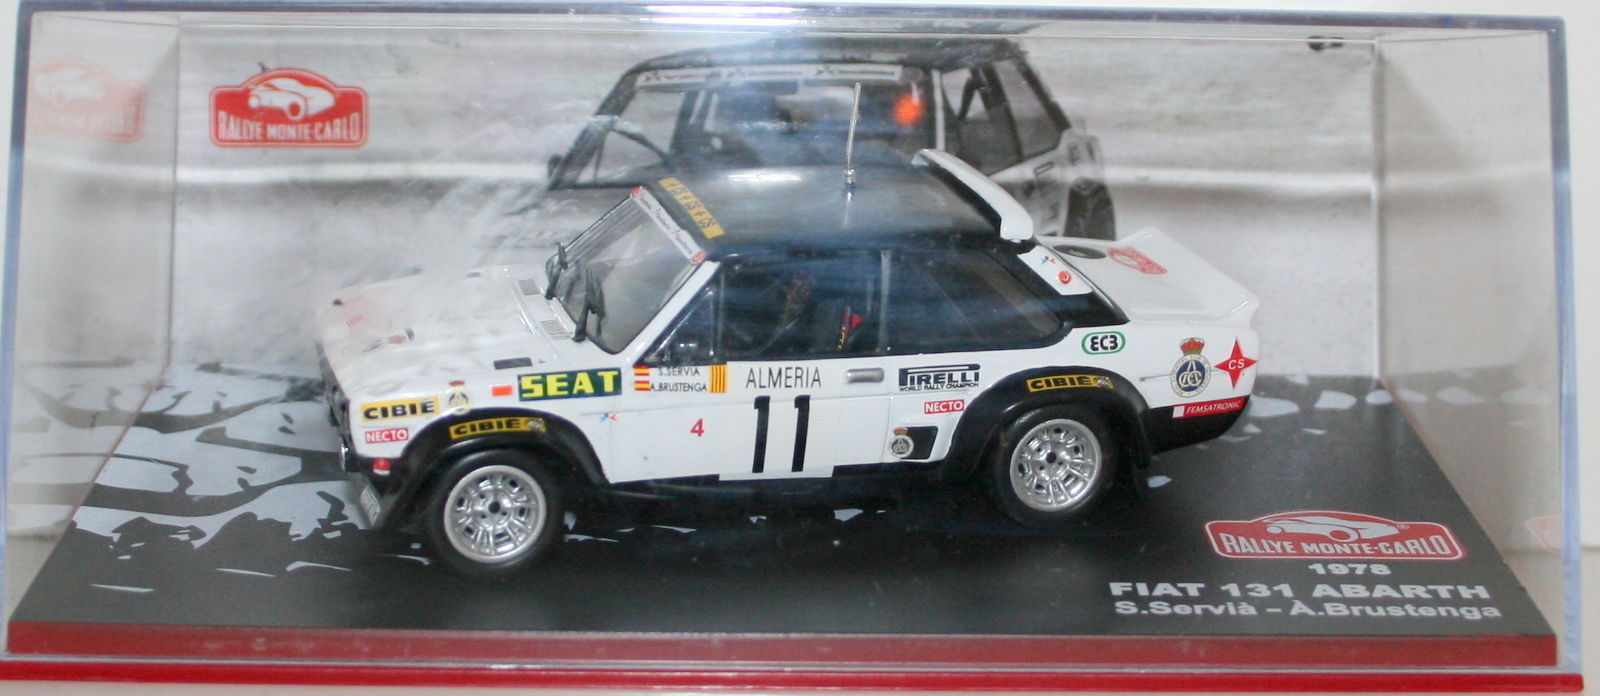 ALTAYA 1/43 FIAT 131 ABARTH 1978 #11 RALLYE MONTE CARLO S SERVIA A BRUSTENGA